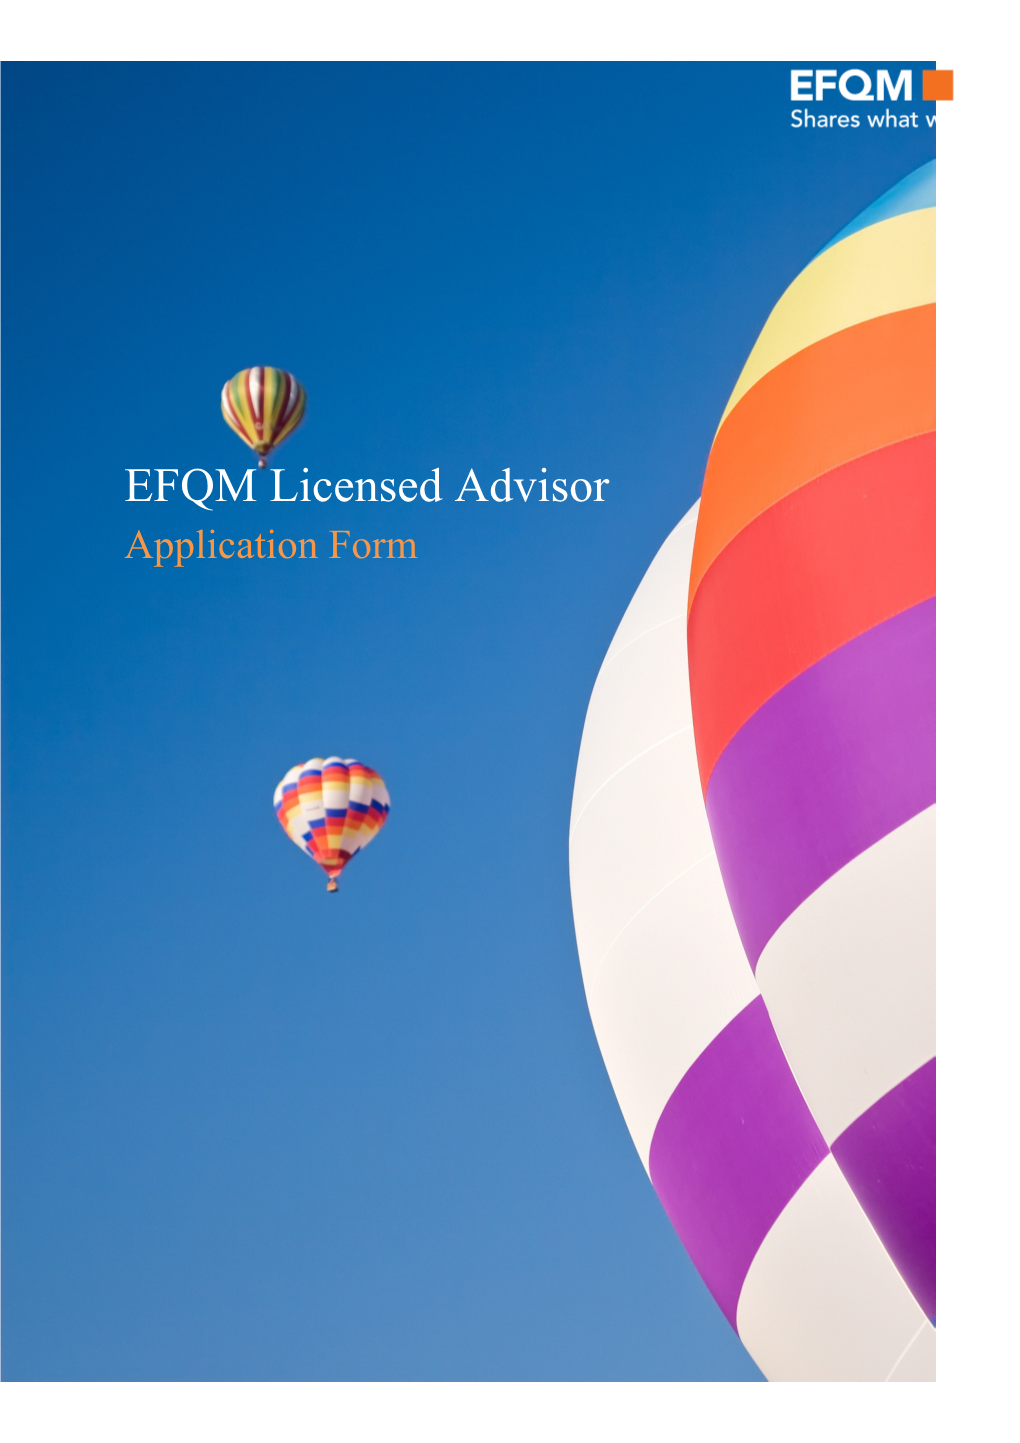 What Is an EFQM Licensed Advisor?